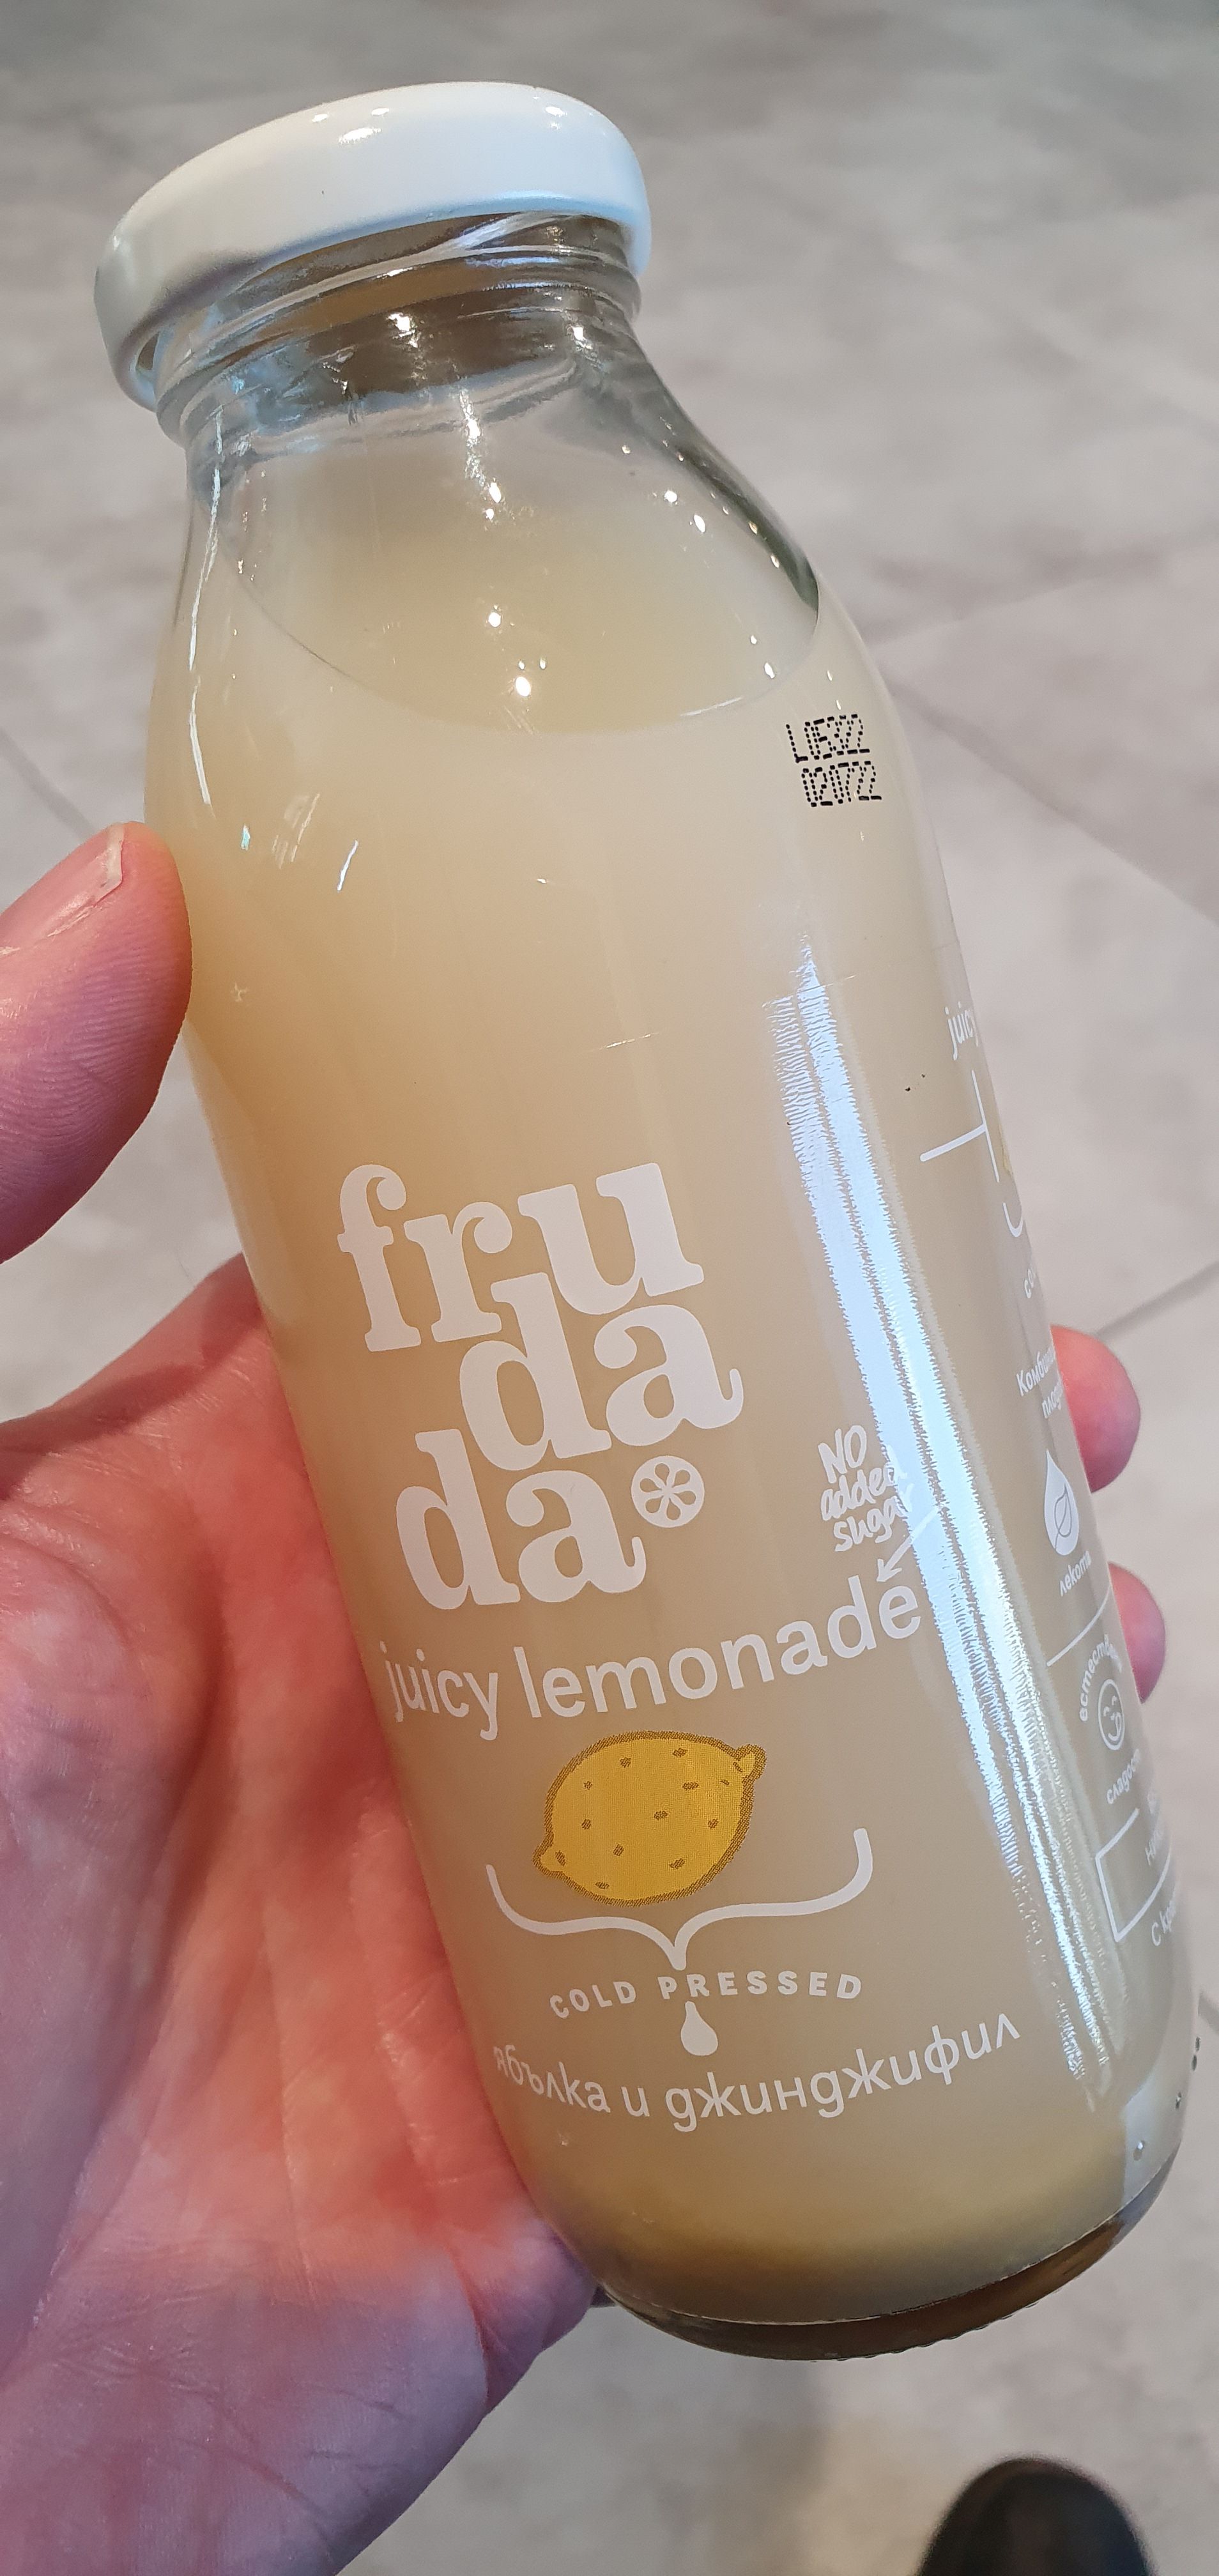 frudada juicy lemonade